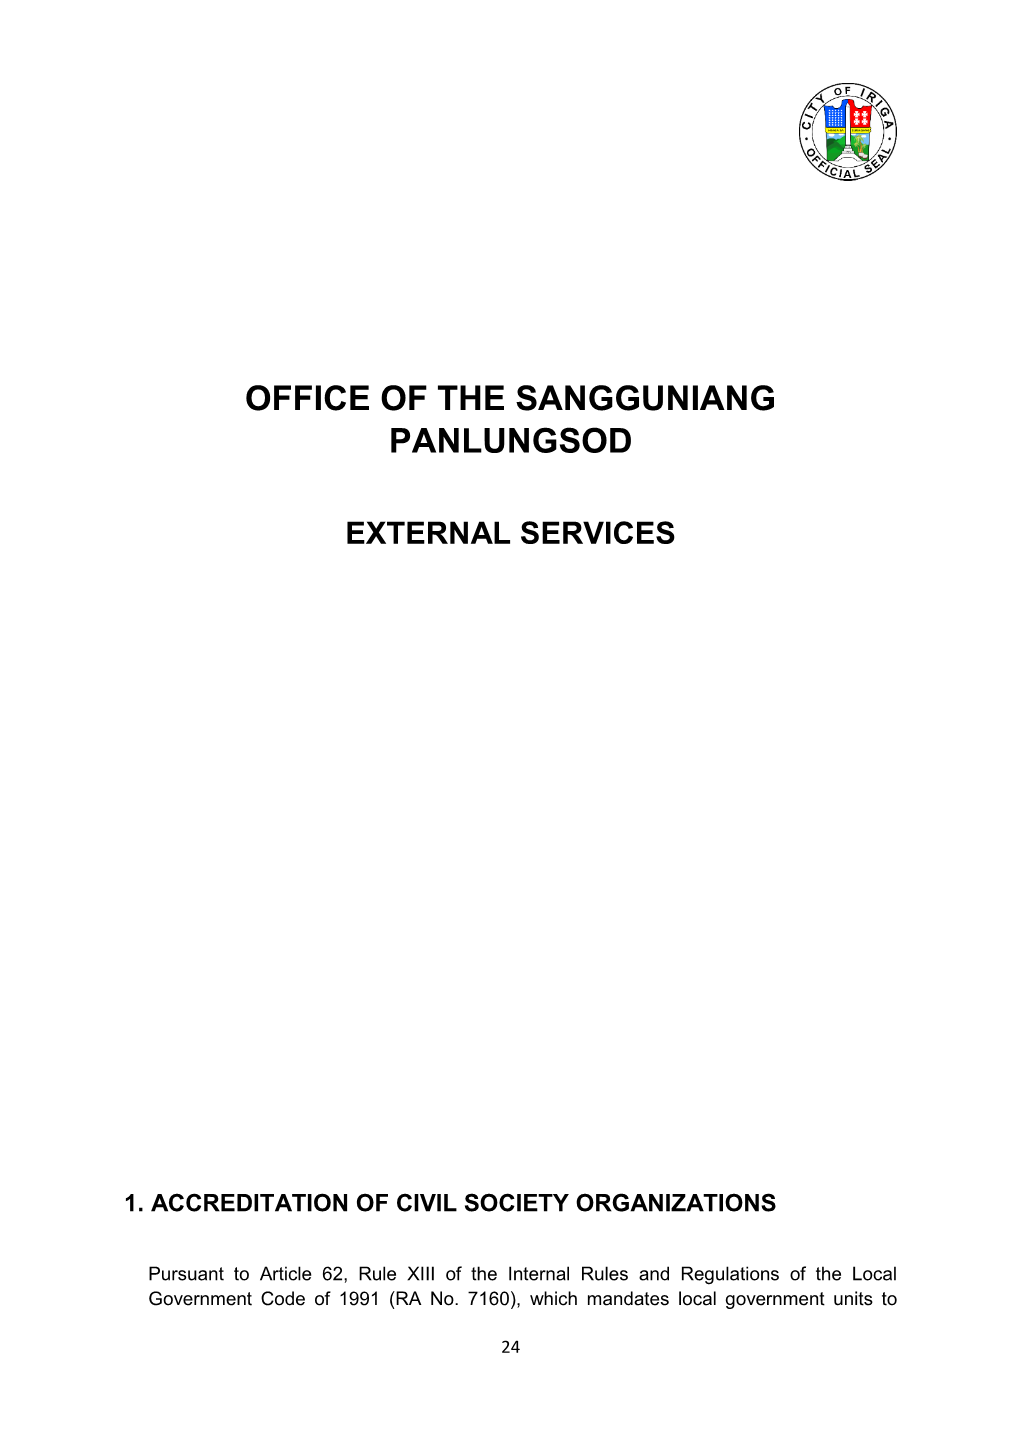 Office of the Sangguniang Panlungsod